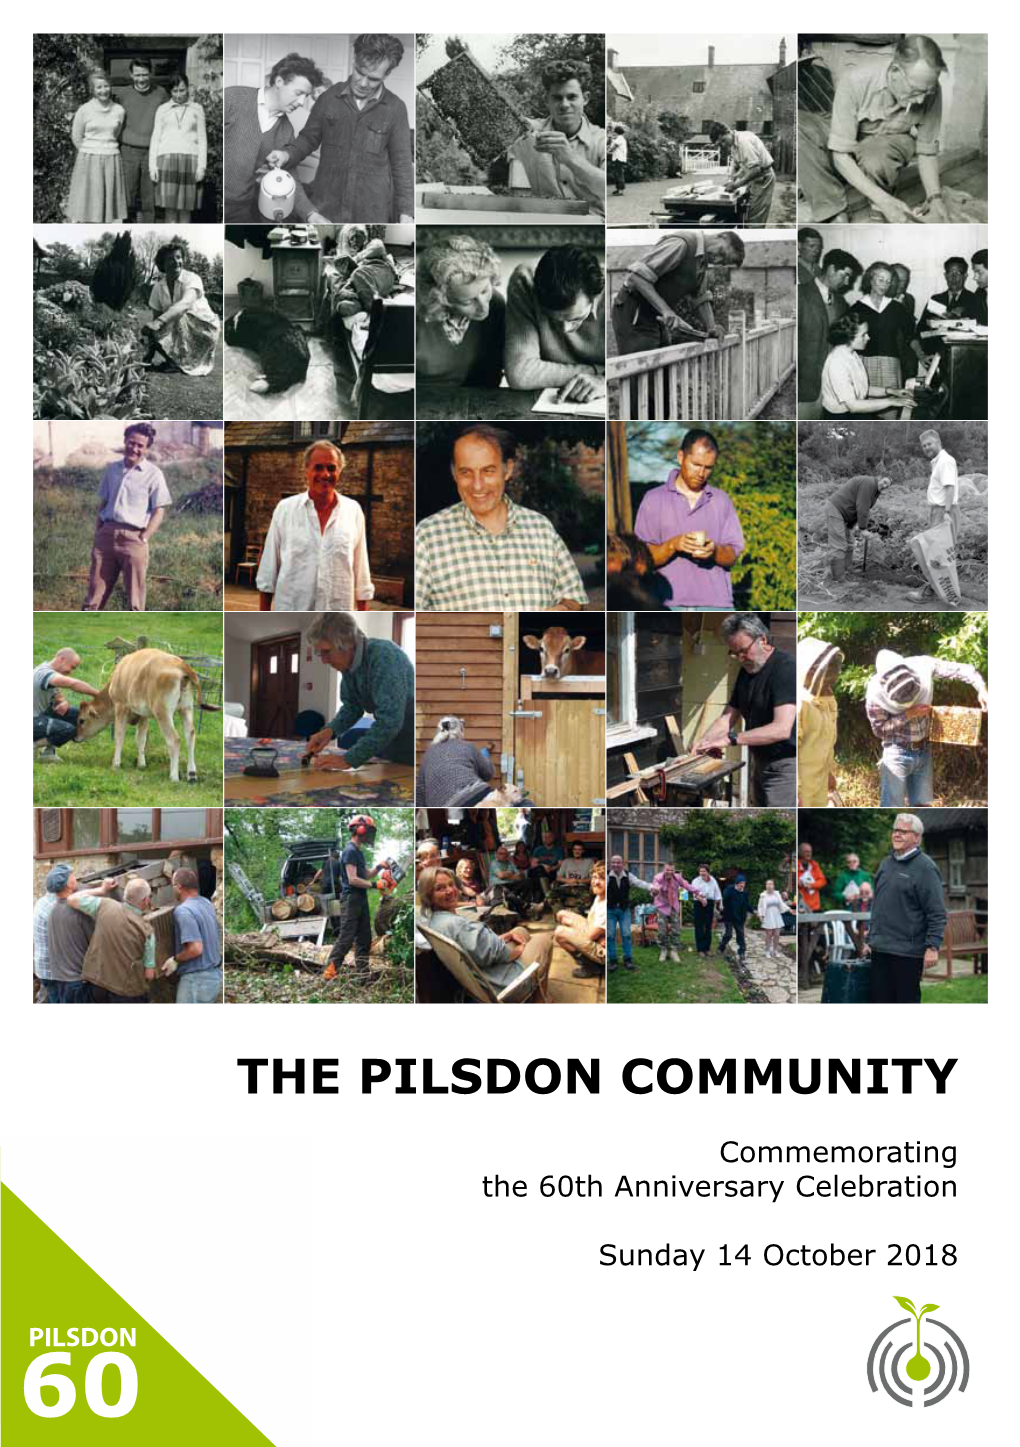 The Pilsdon Community the Pilsdo